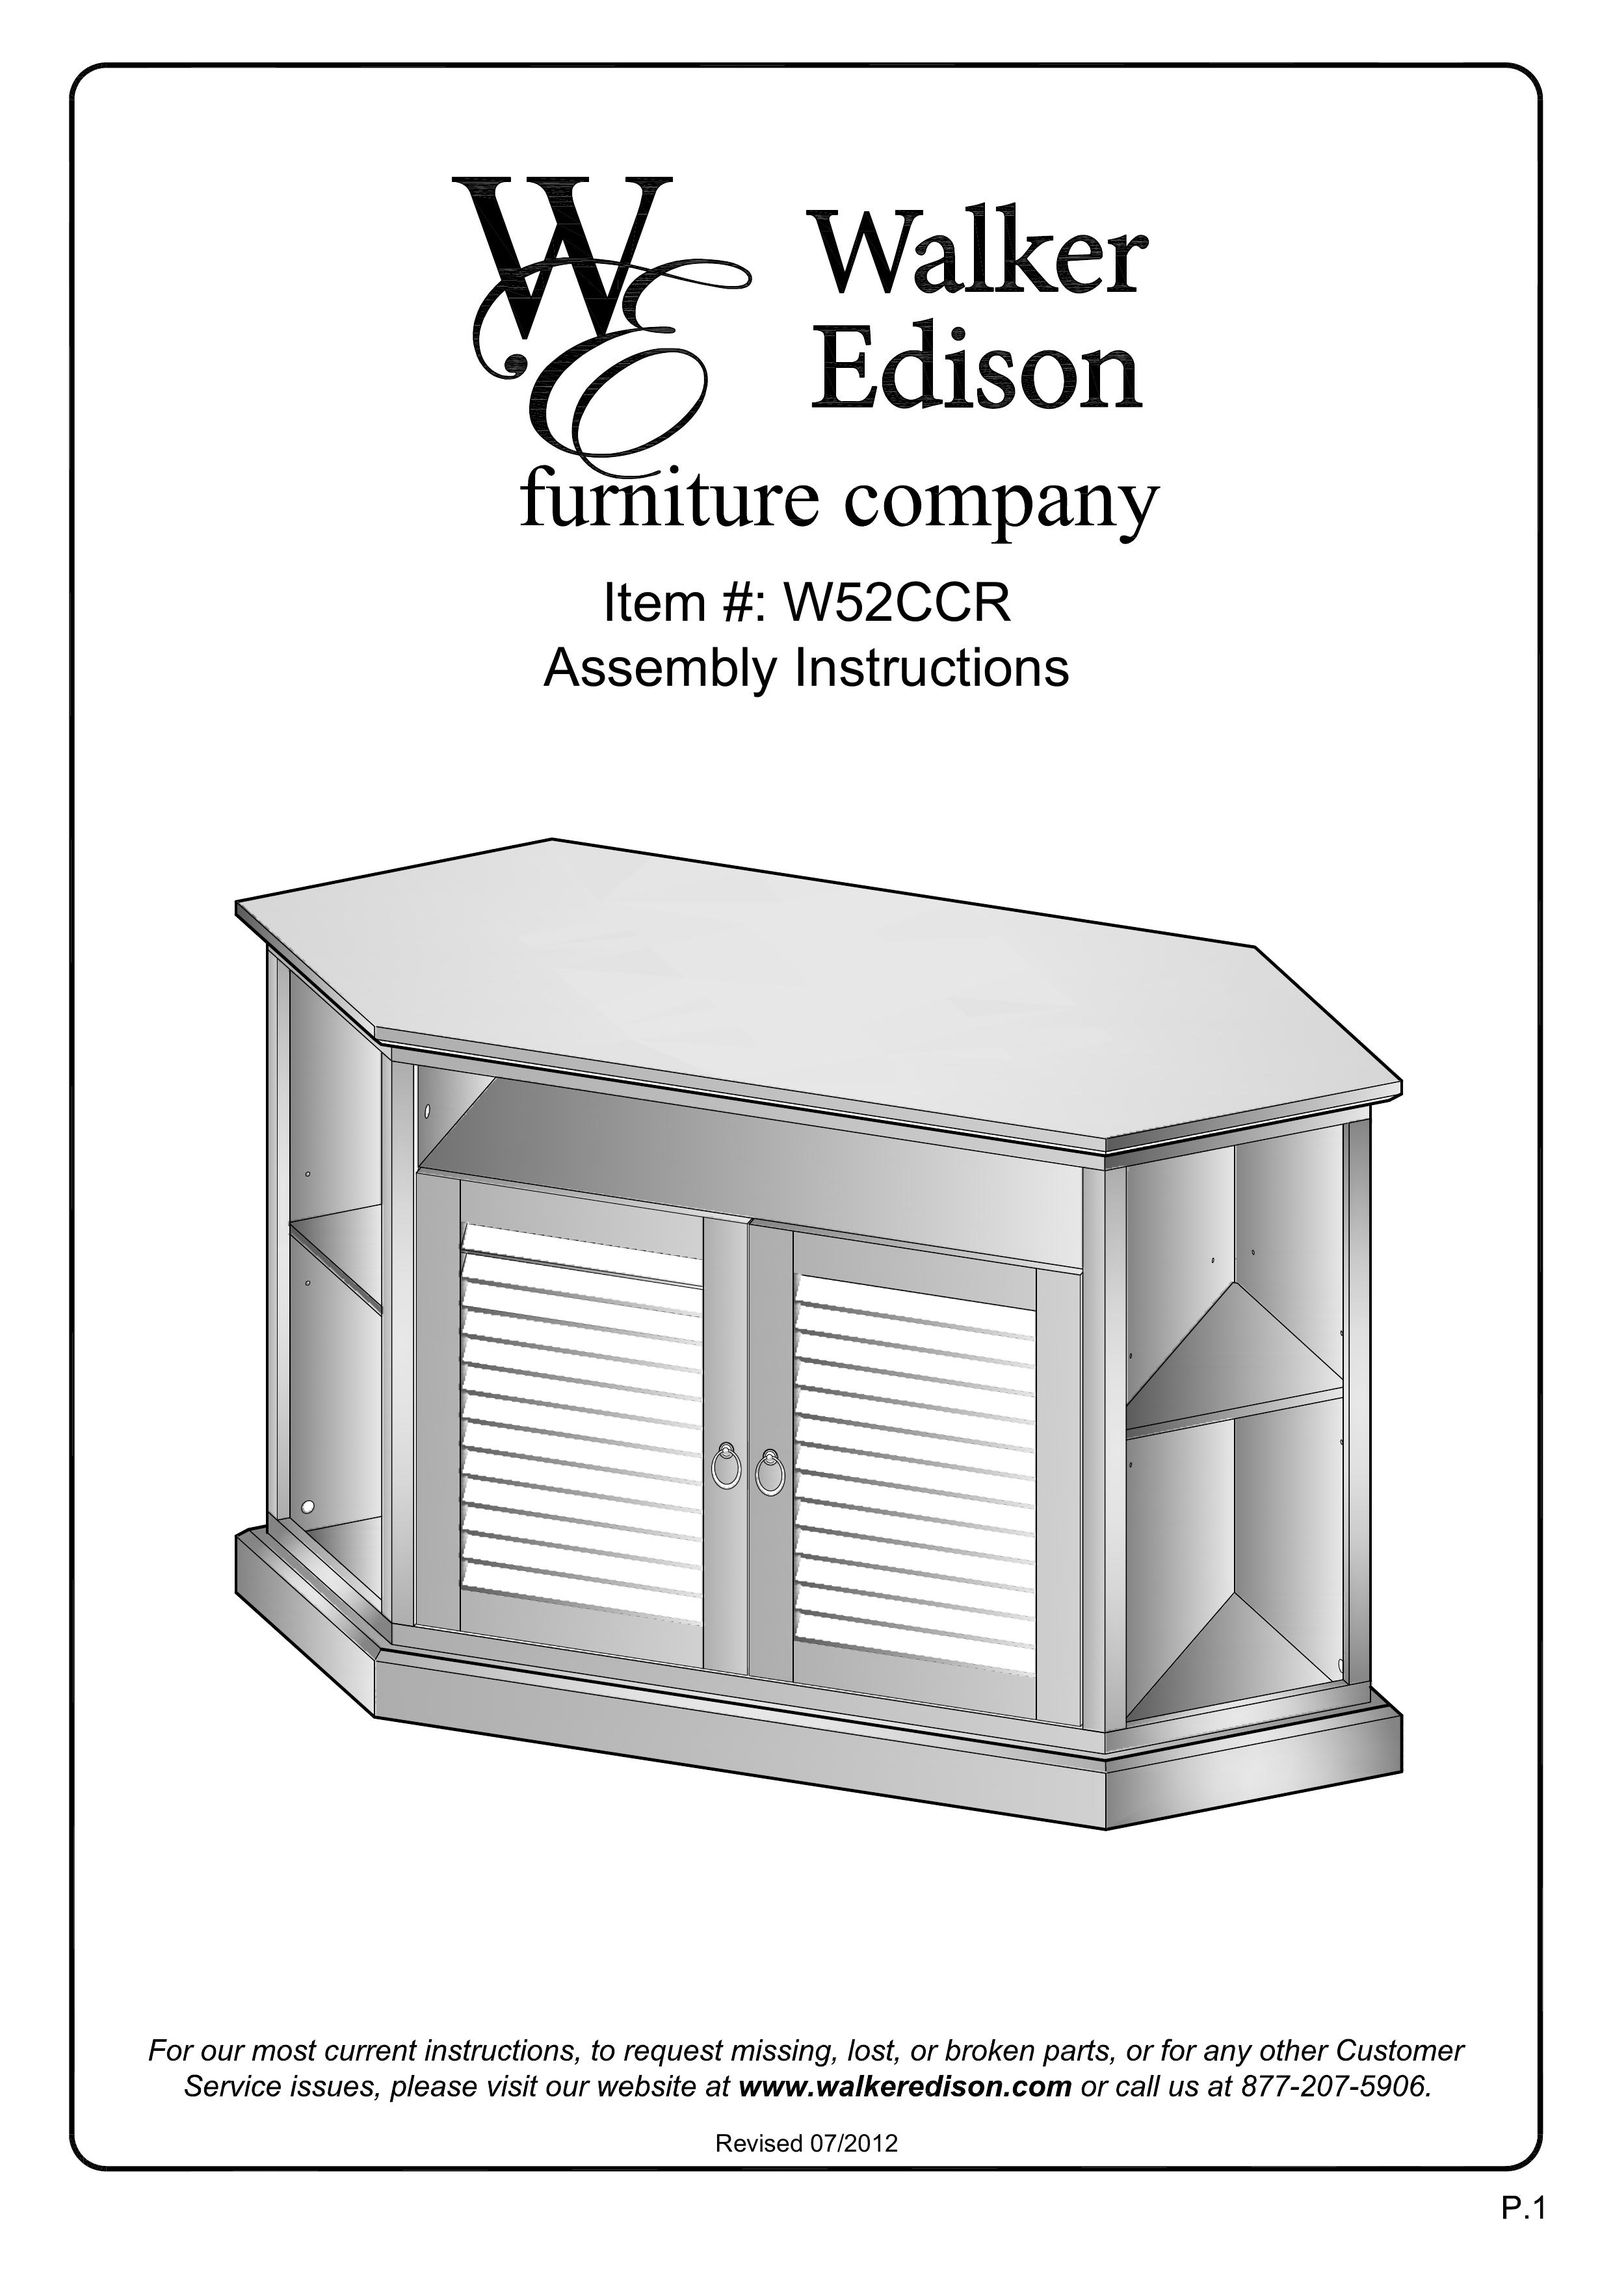 Walker W52CCRWH Indoor Furnishings User Manual